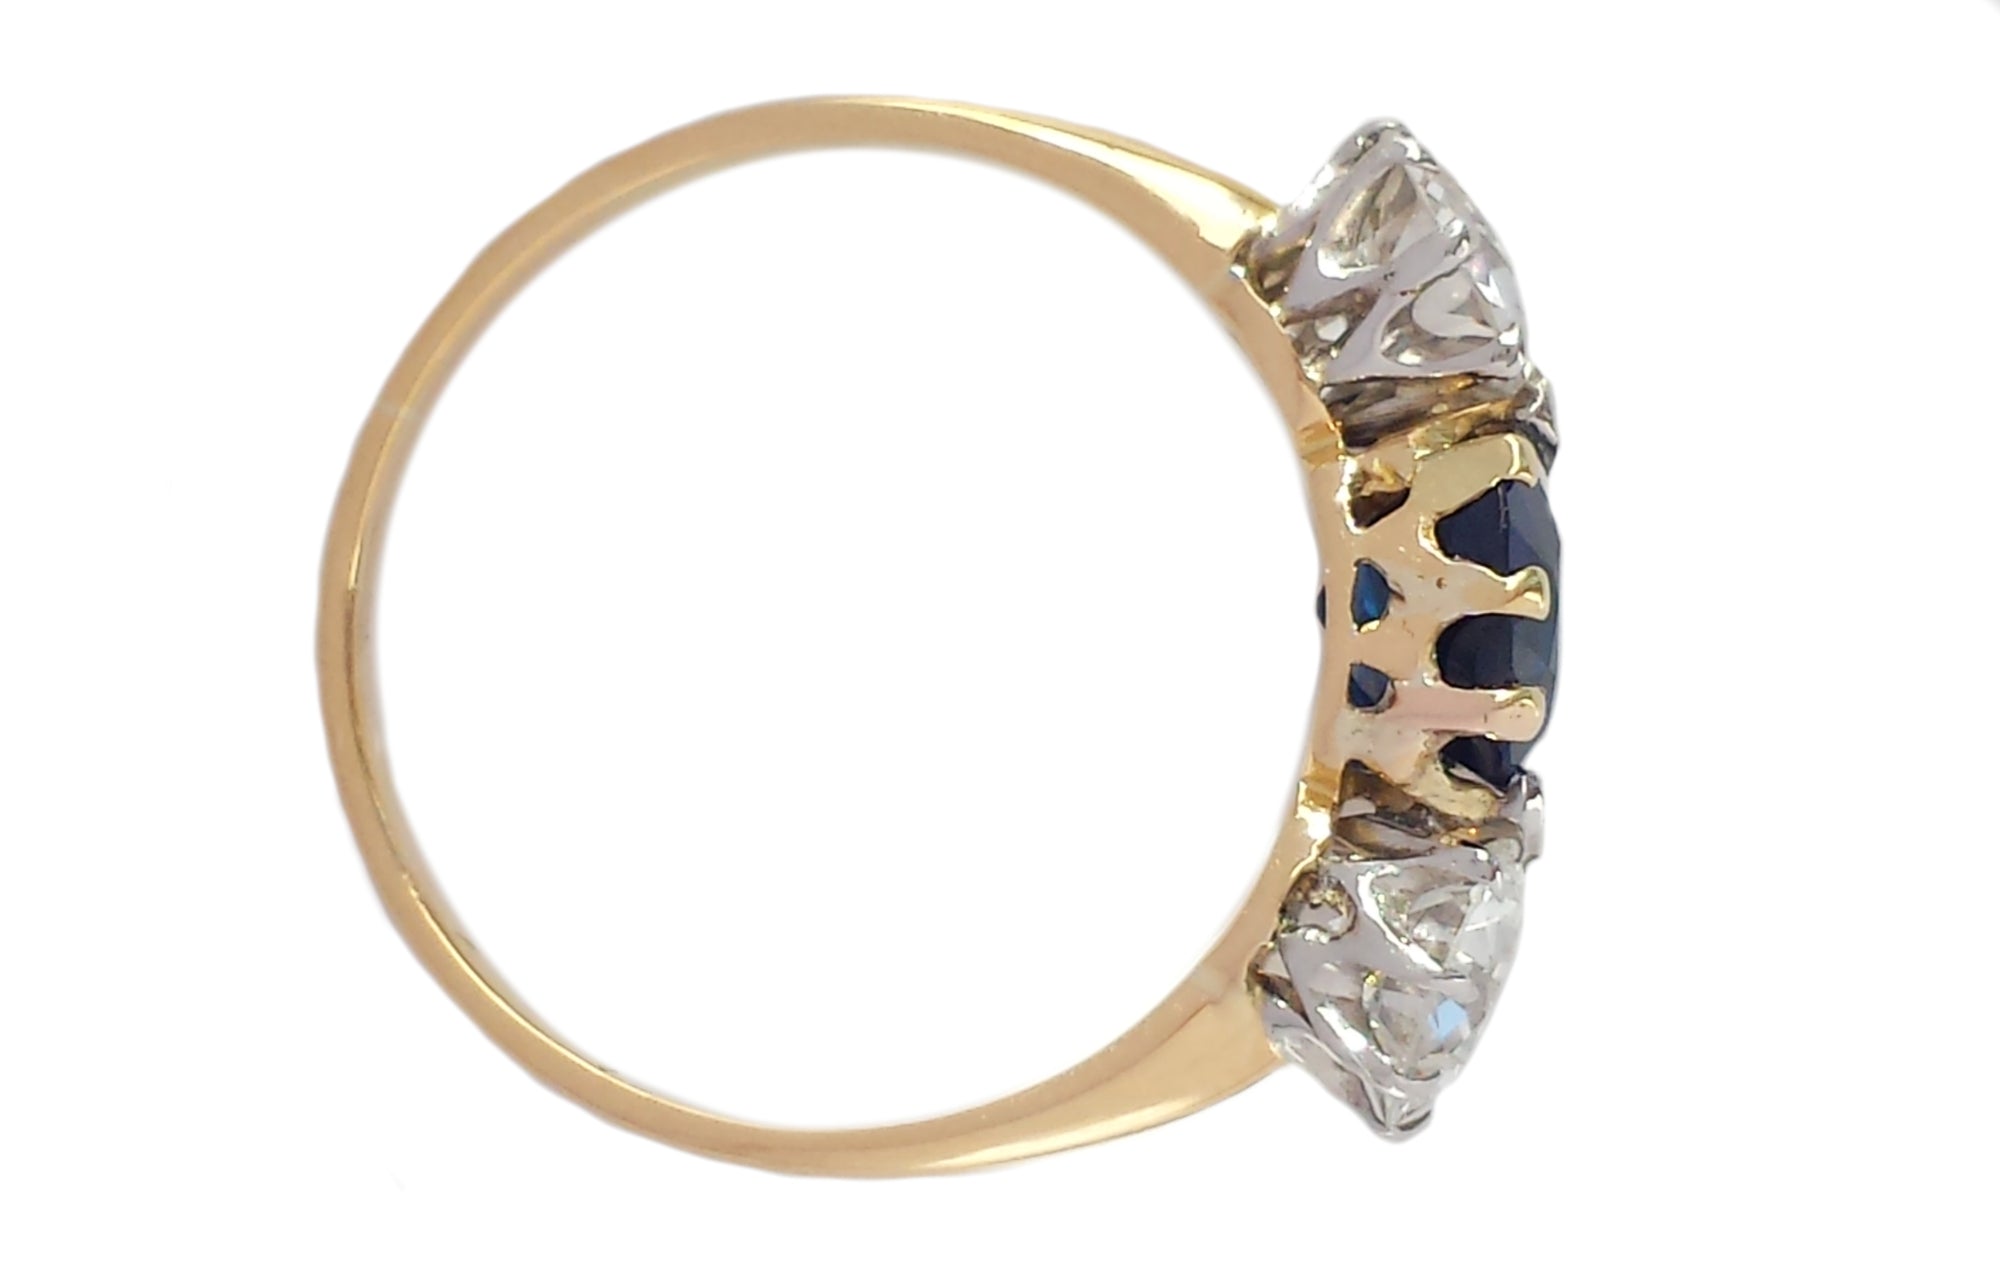 Antique 3-Stone Natural Sapphire & Diamond Engagement Ring